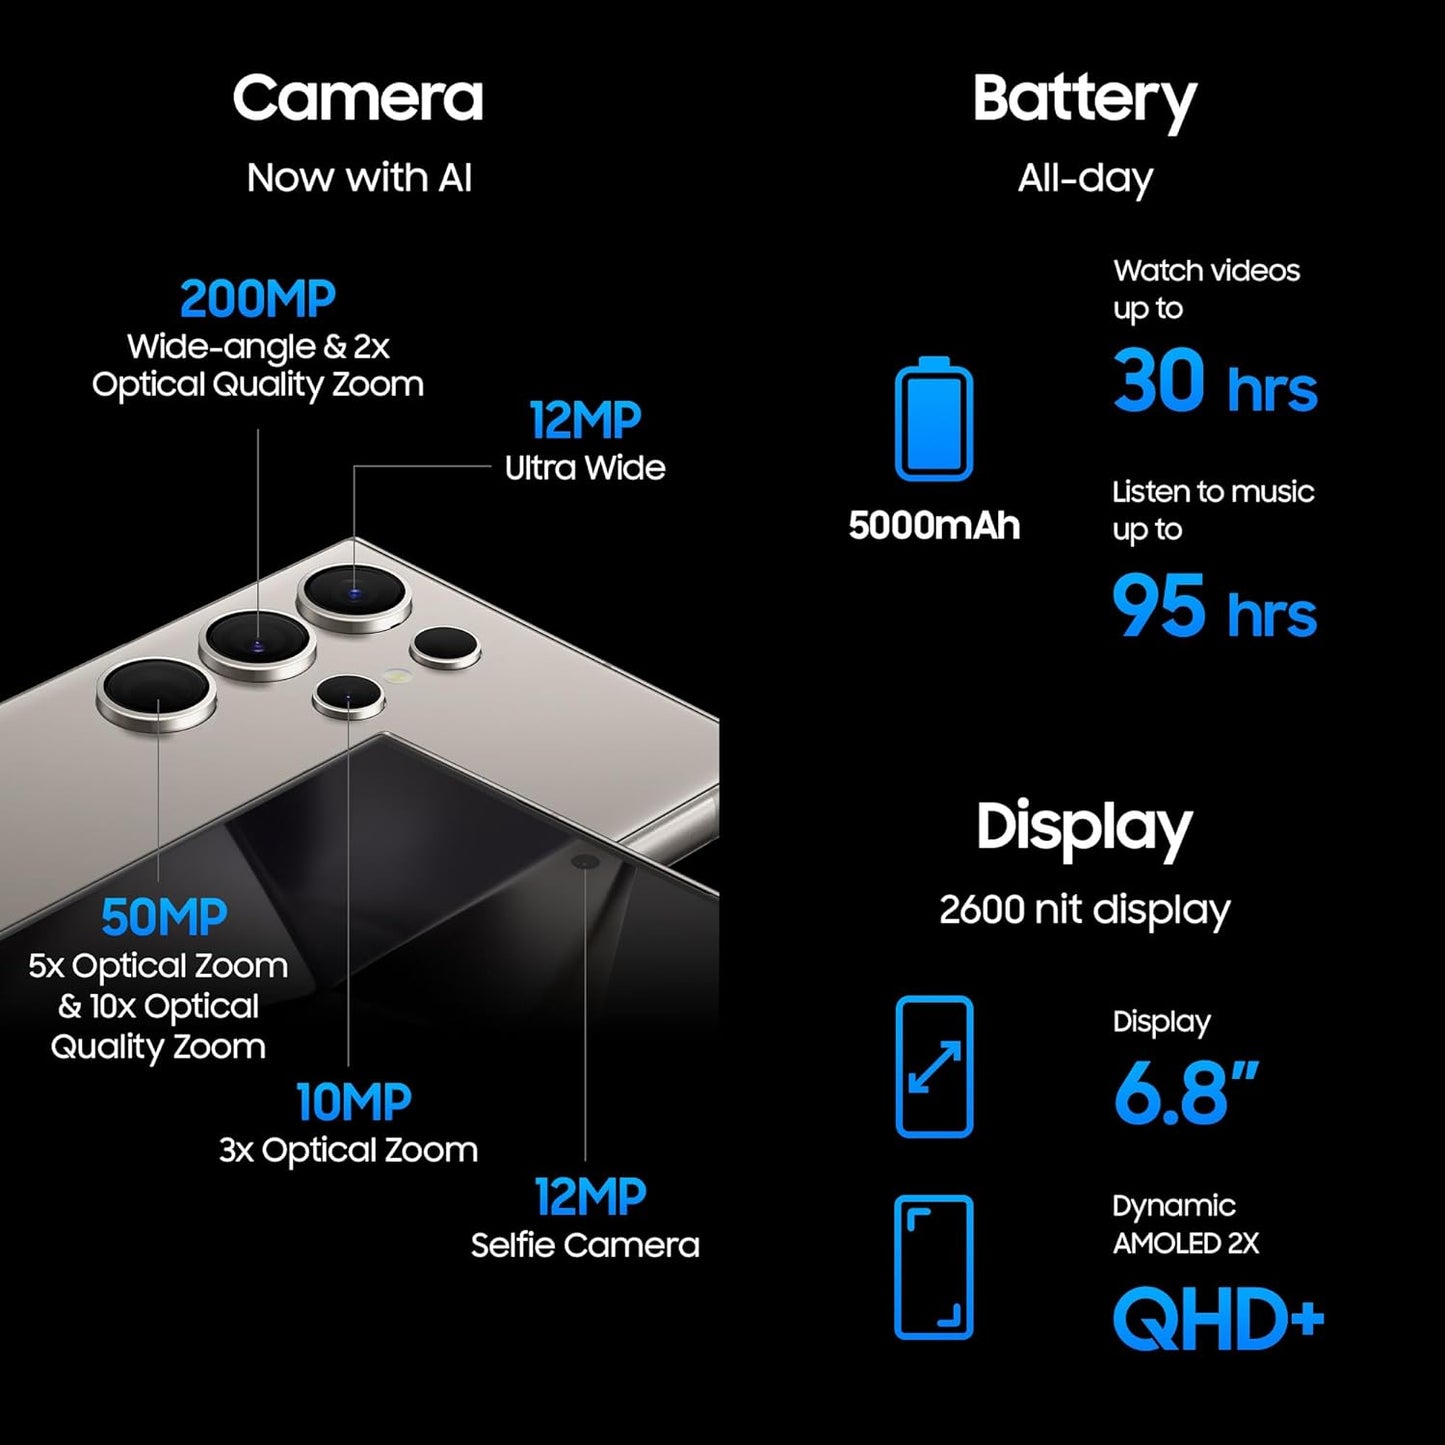 SAMSUNG Galaxy S24+, AI Phone, 512GB Storage, Cobalt Violet, 12GB RAM, Android Smartphone, 50MP Camera, Bigger Display, Long Battery Life + Samsung Travel Power Adapter 45W, Black